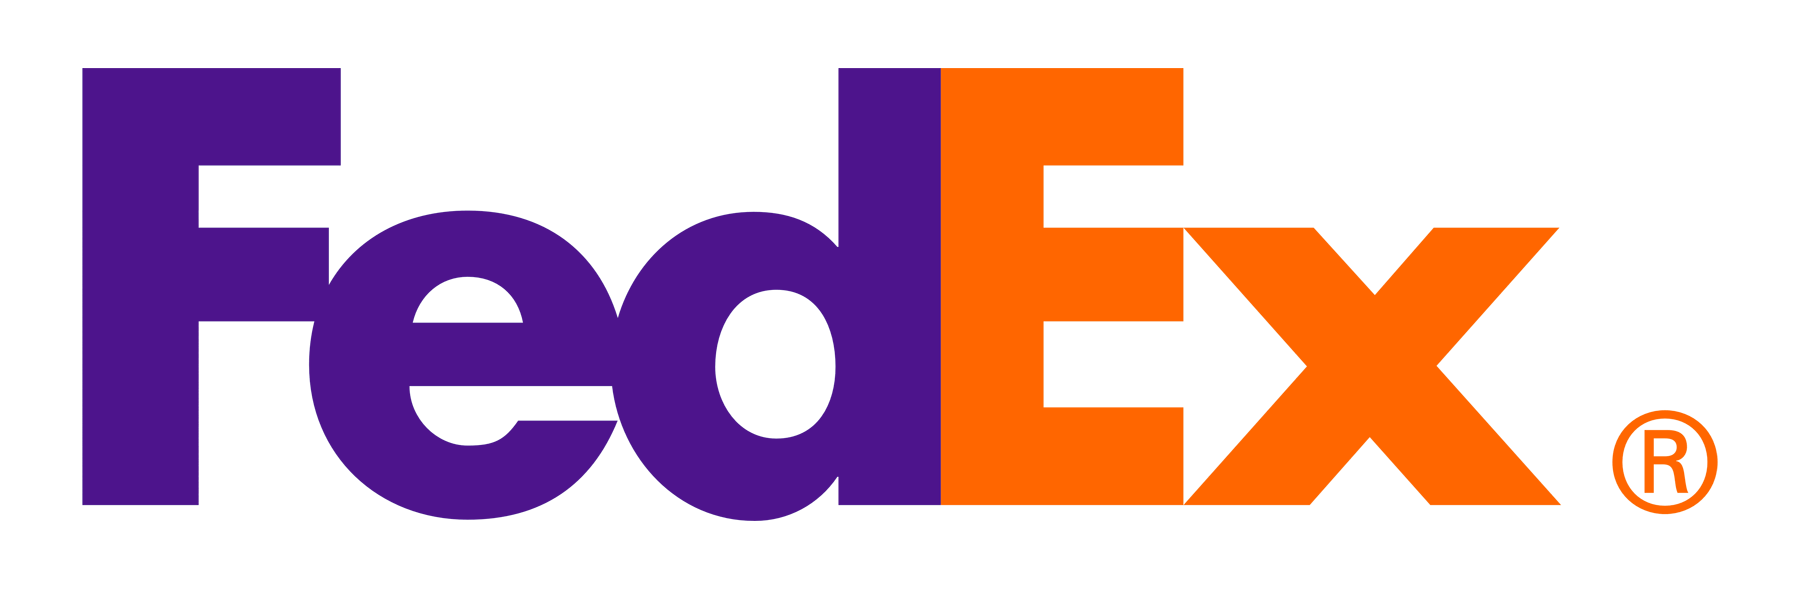 Large FedEx Ground Logo - FedEx, UPS, Shipping Services, Hays, KS., Motor Freight, Crate